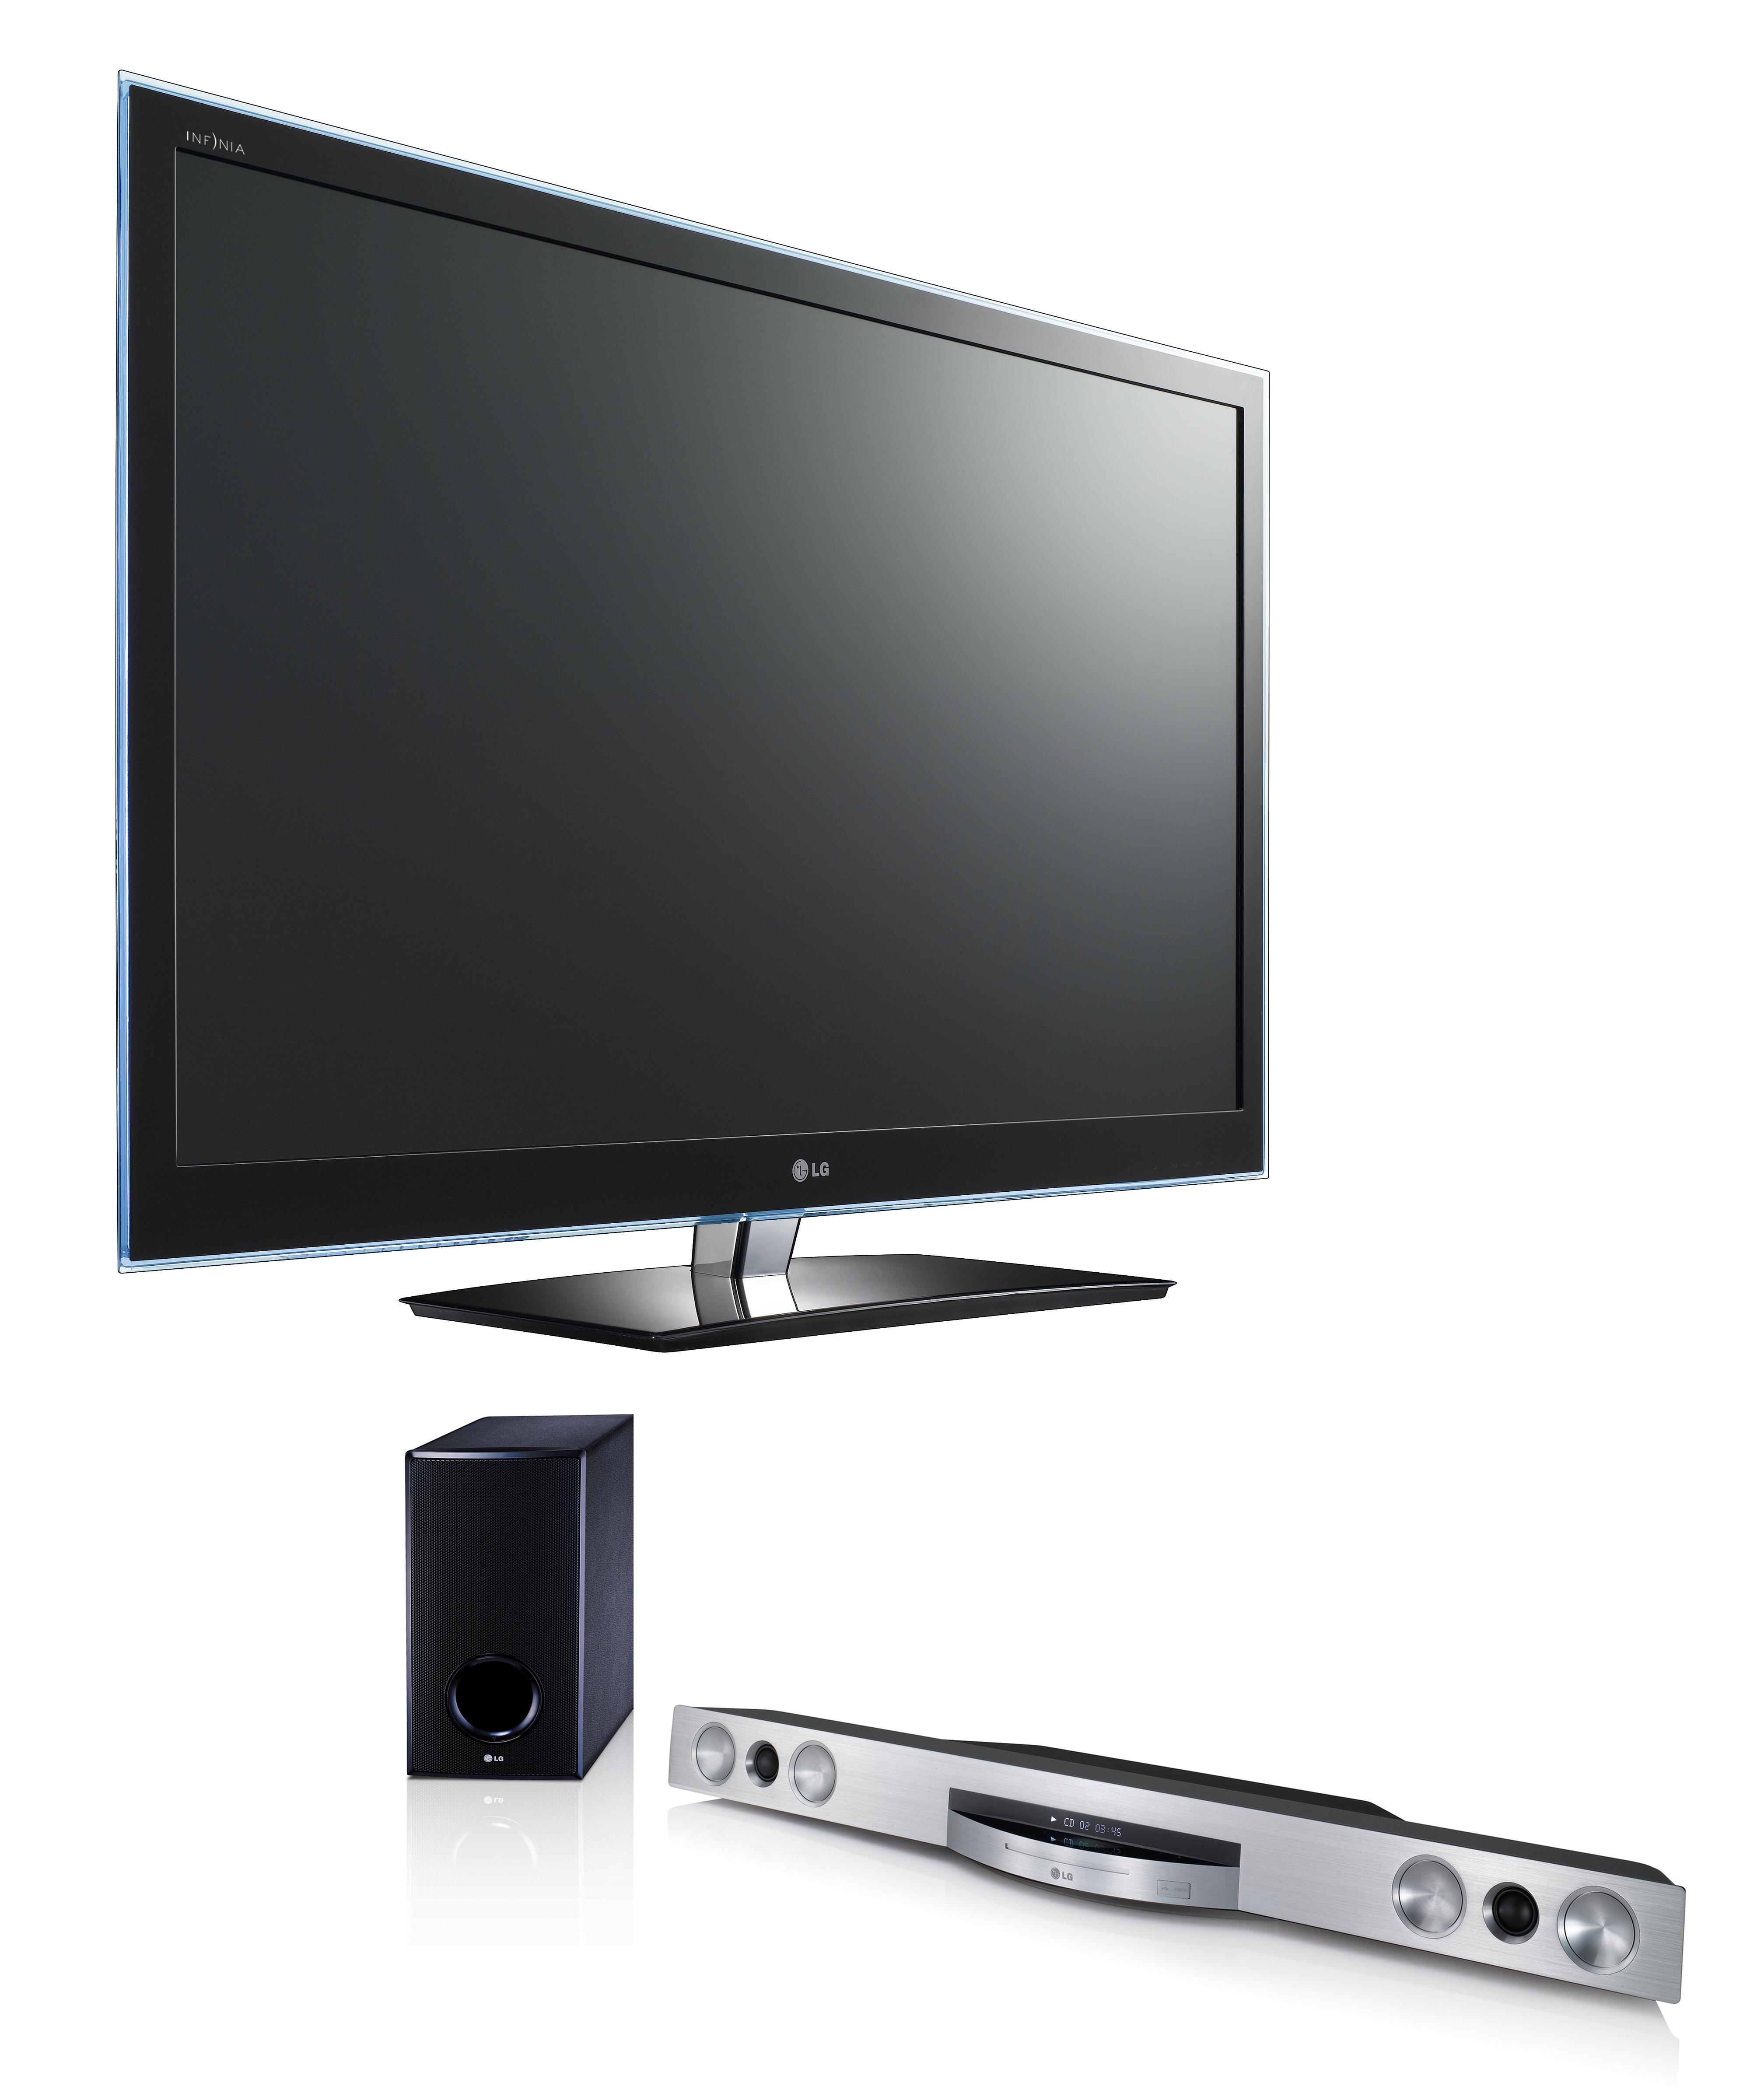 LG CINEMA 3D Smart TV model 55LW650S and 3D Blu-ray Sound Bar model HLX56S